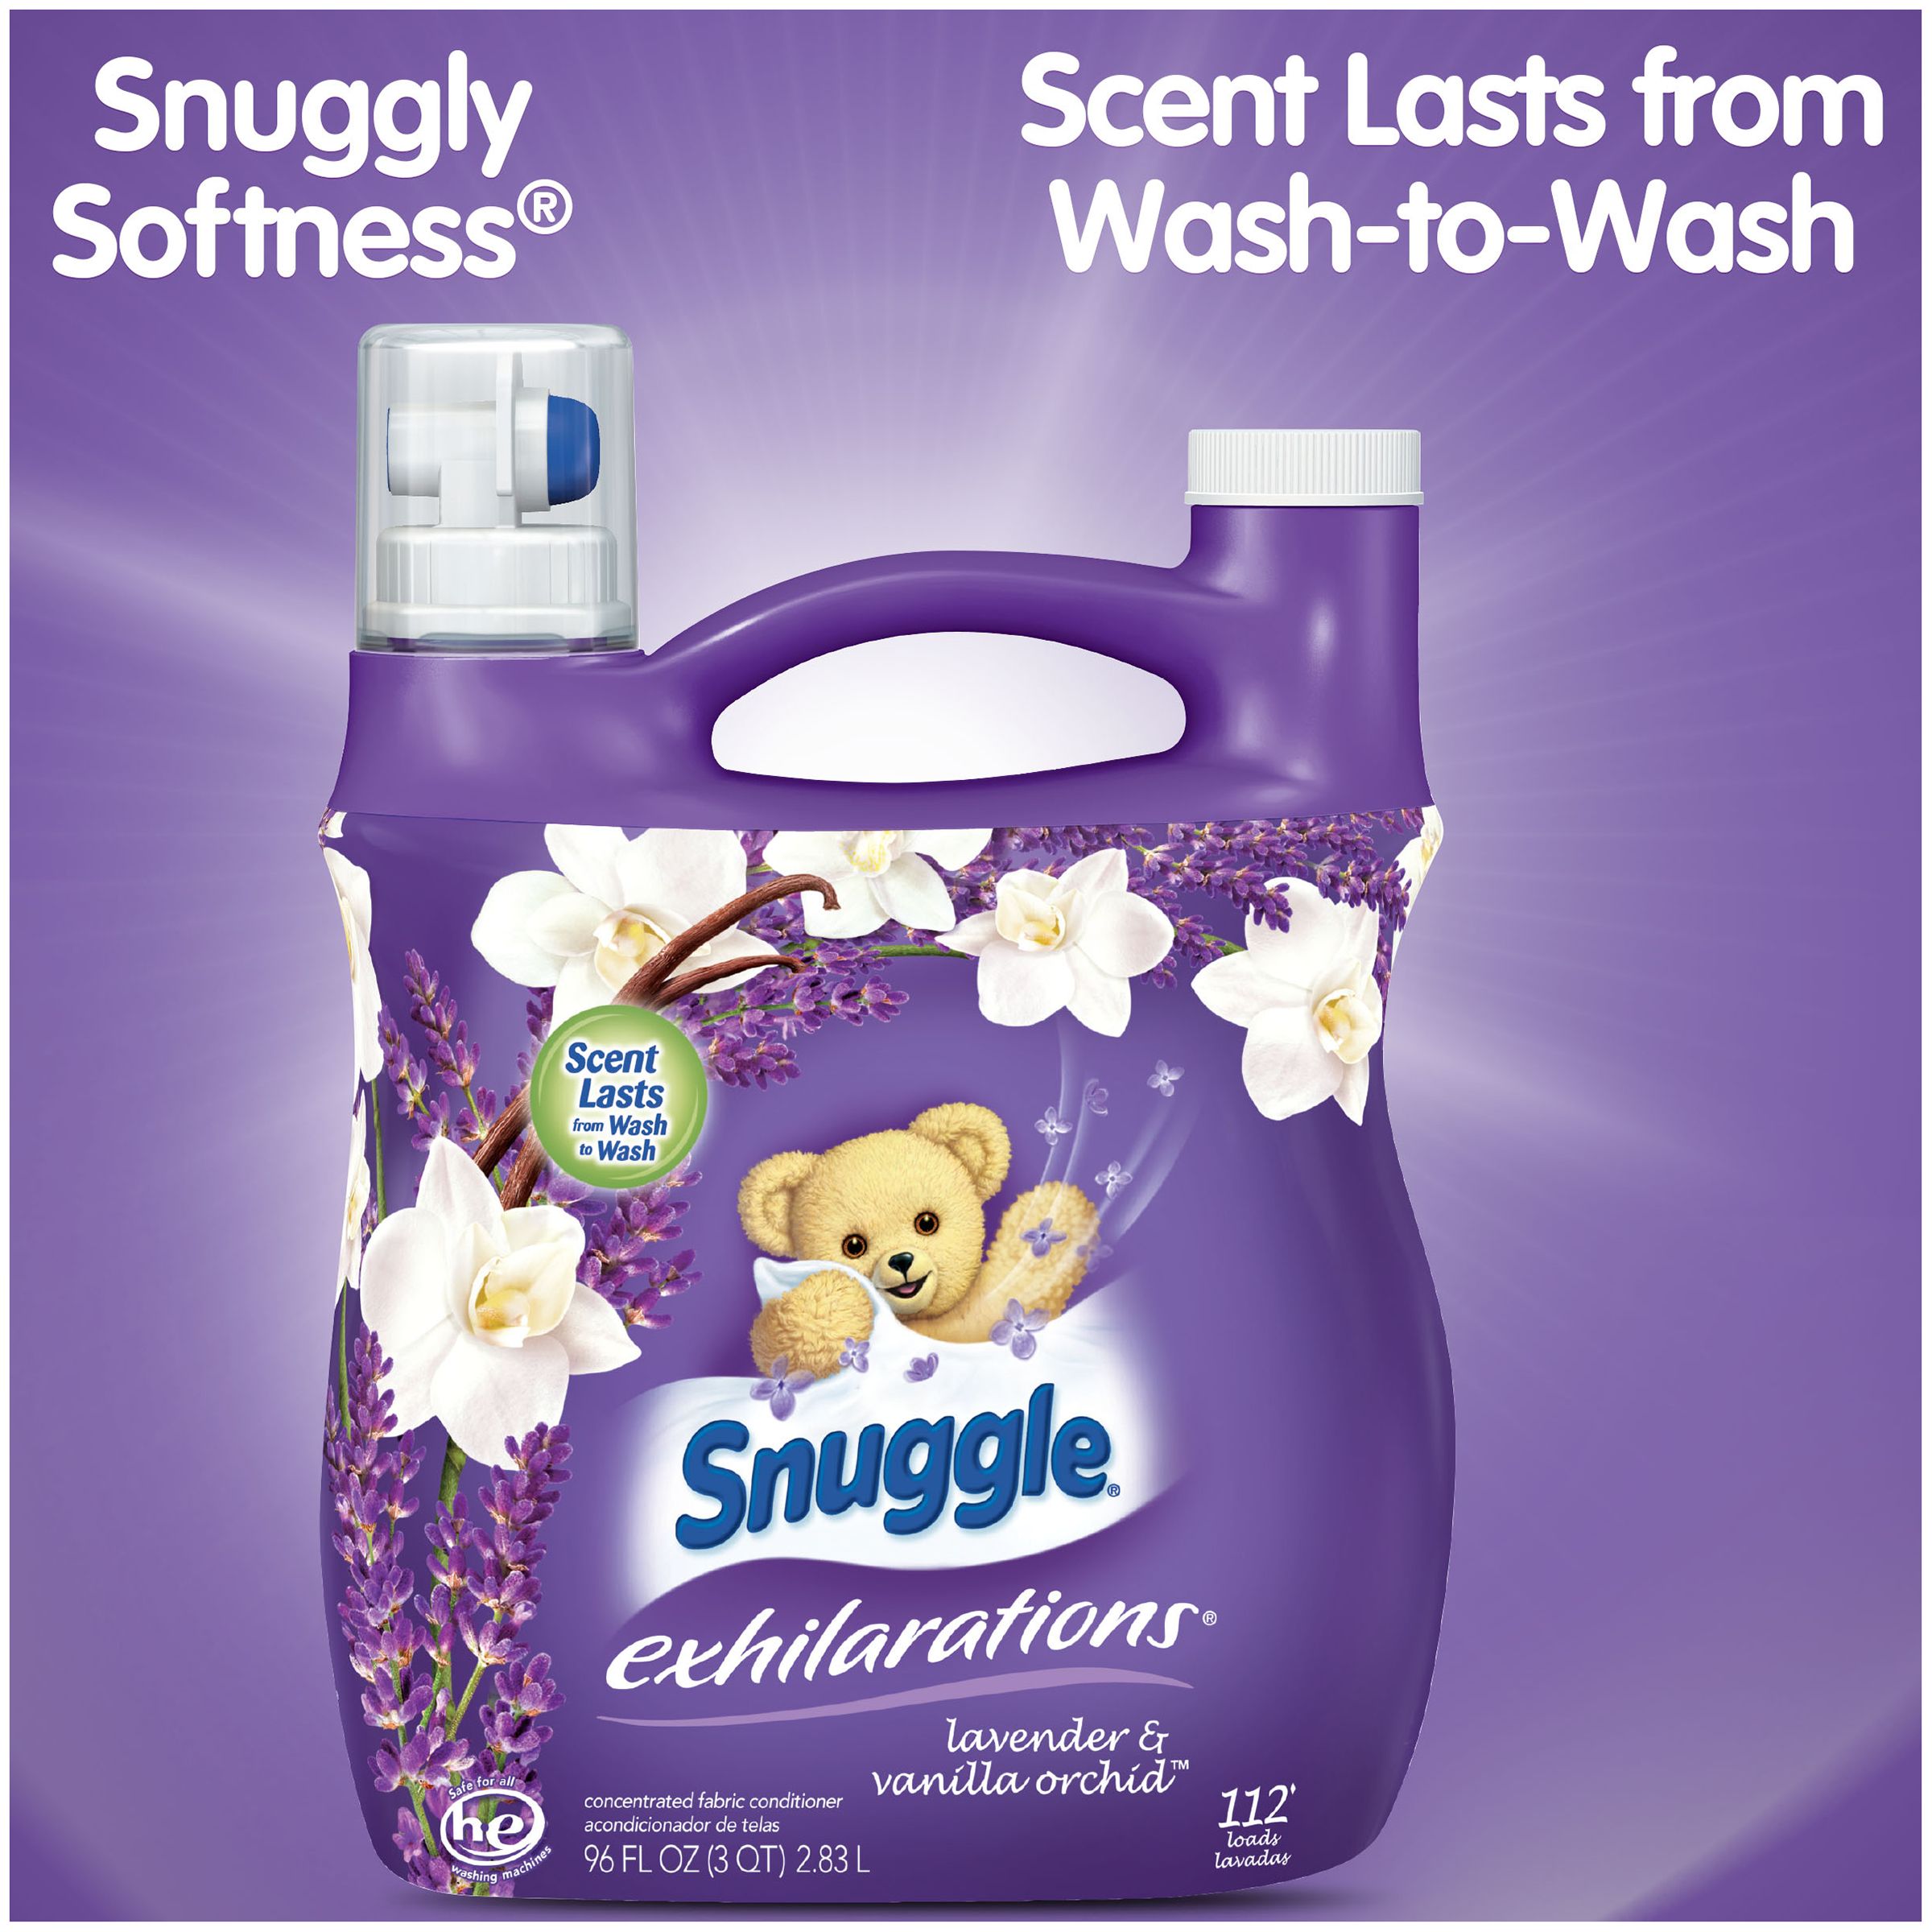 Snuggle Liquid Fabric Softener, Lavender & Vanilla Orchid, 96 Ounce, 112 Loads - image 4 of 5